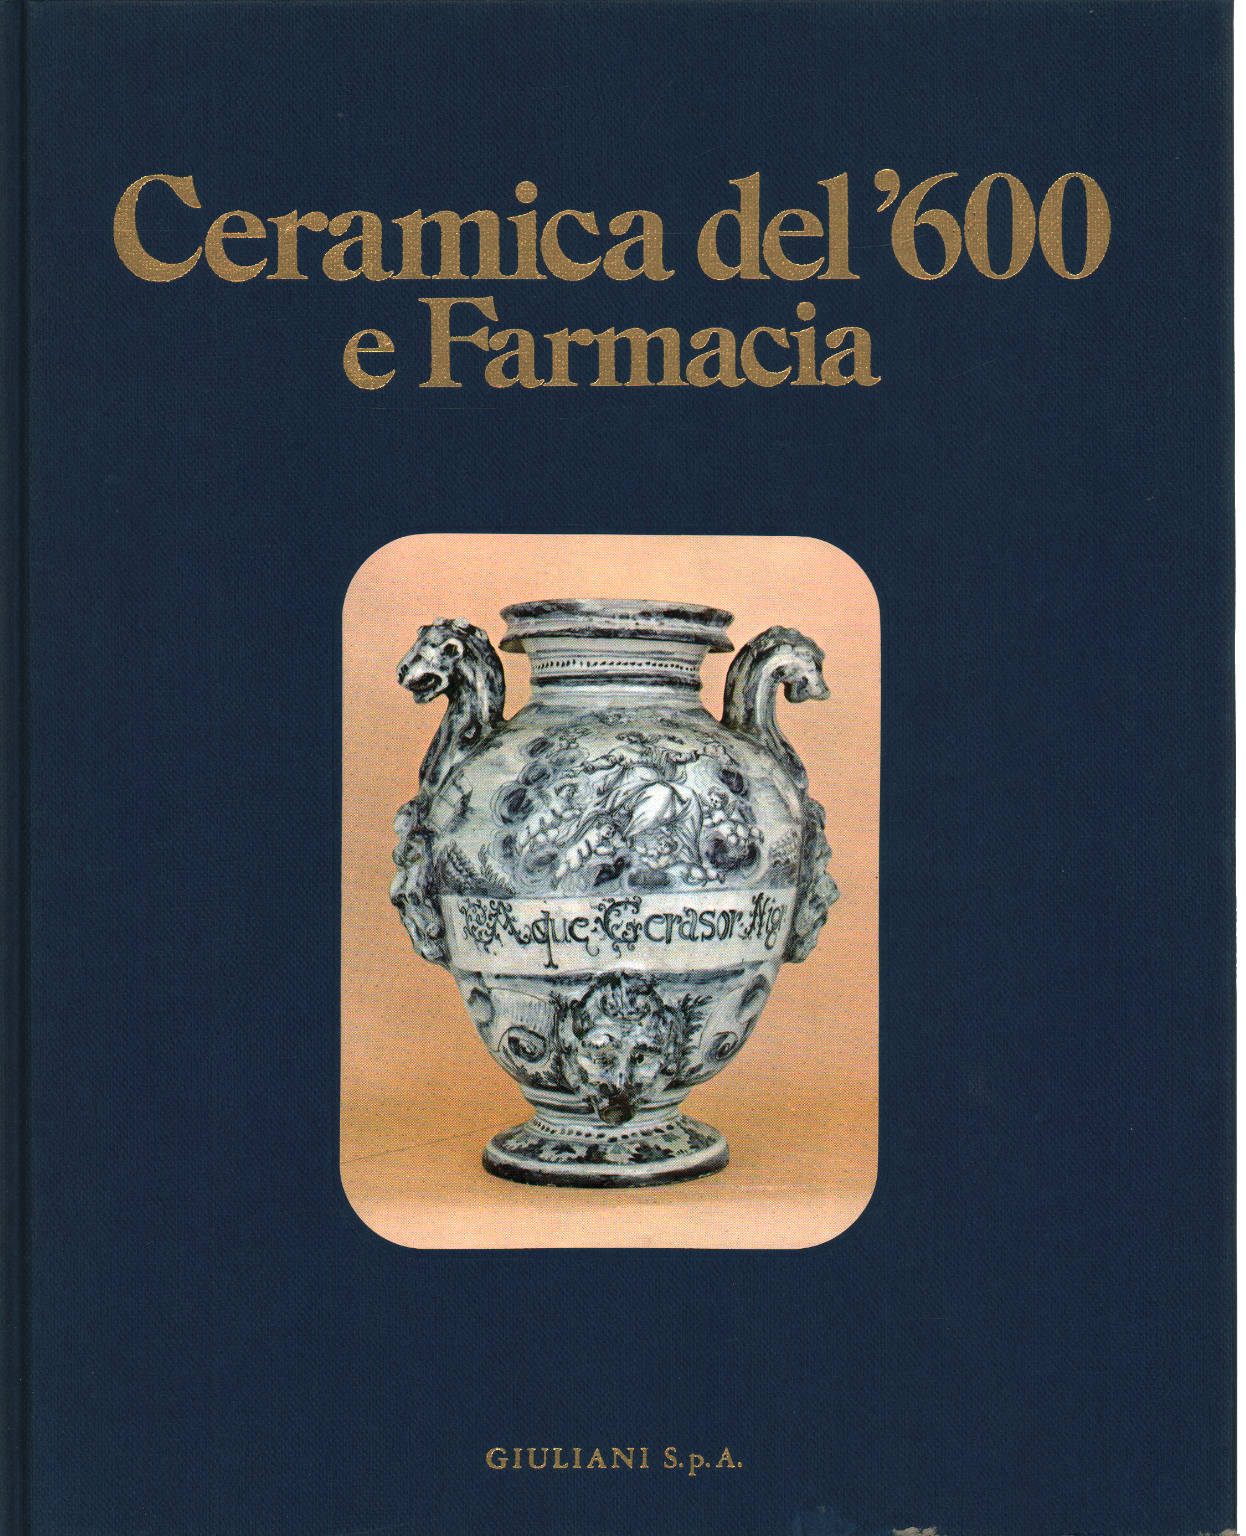 Cerámica y farmacia del siglo XVII, Giorgio Lise